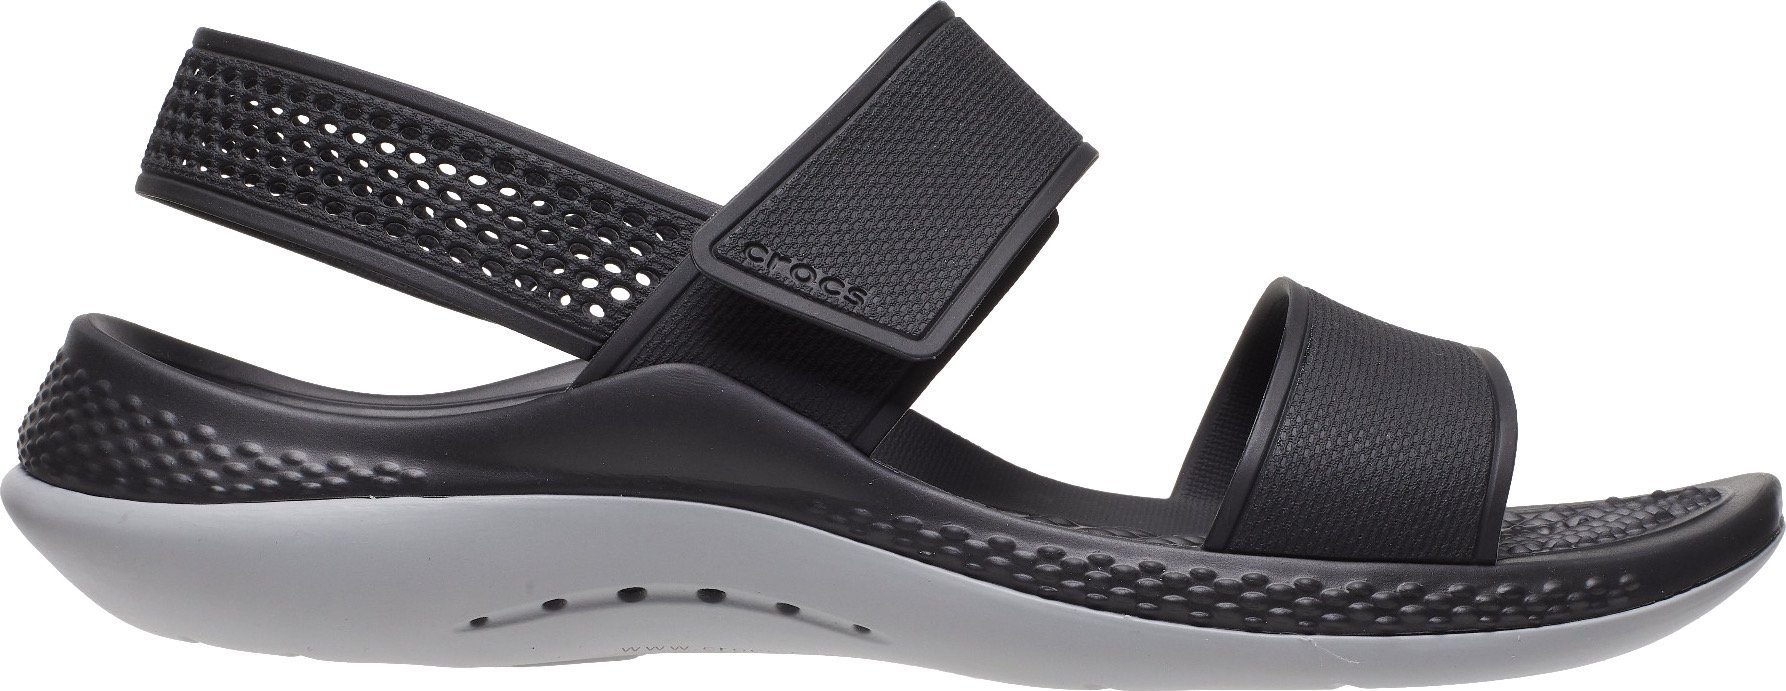 mit flexibler schwarz-grau 360 Laufsohle LiteRide Sandale Sandal Crocs